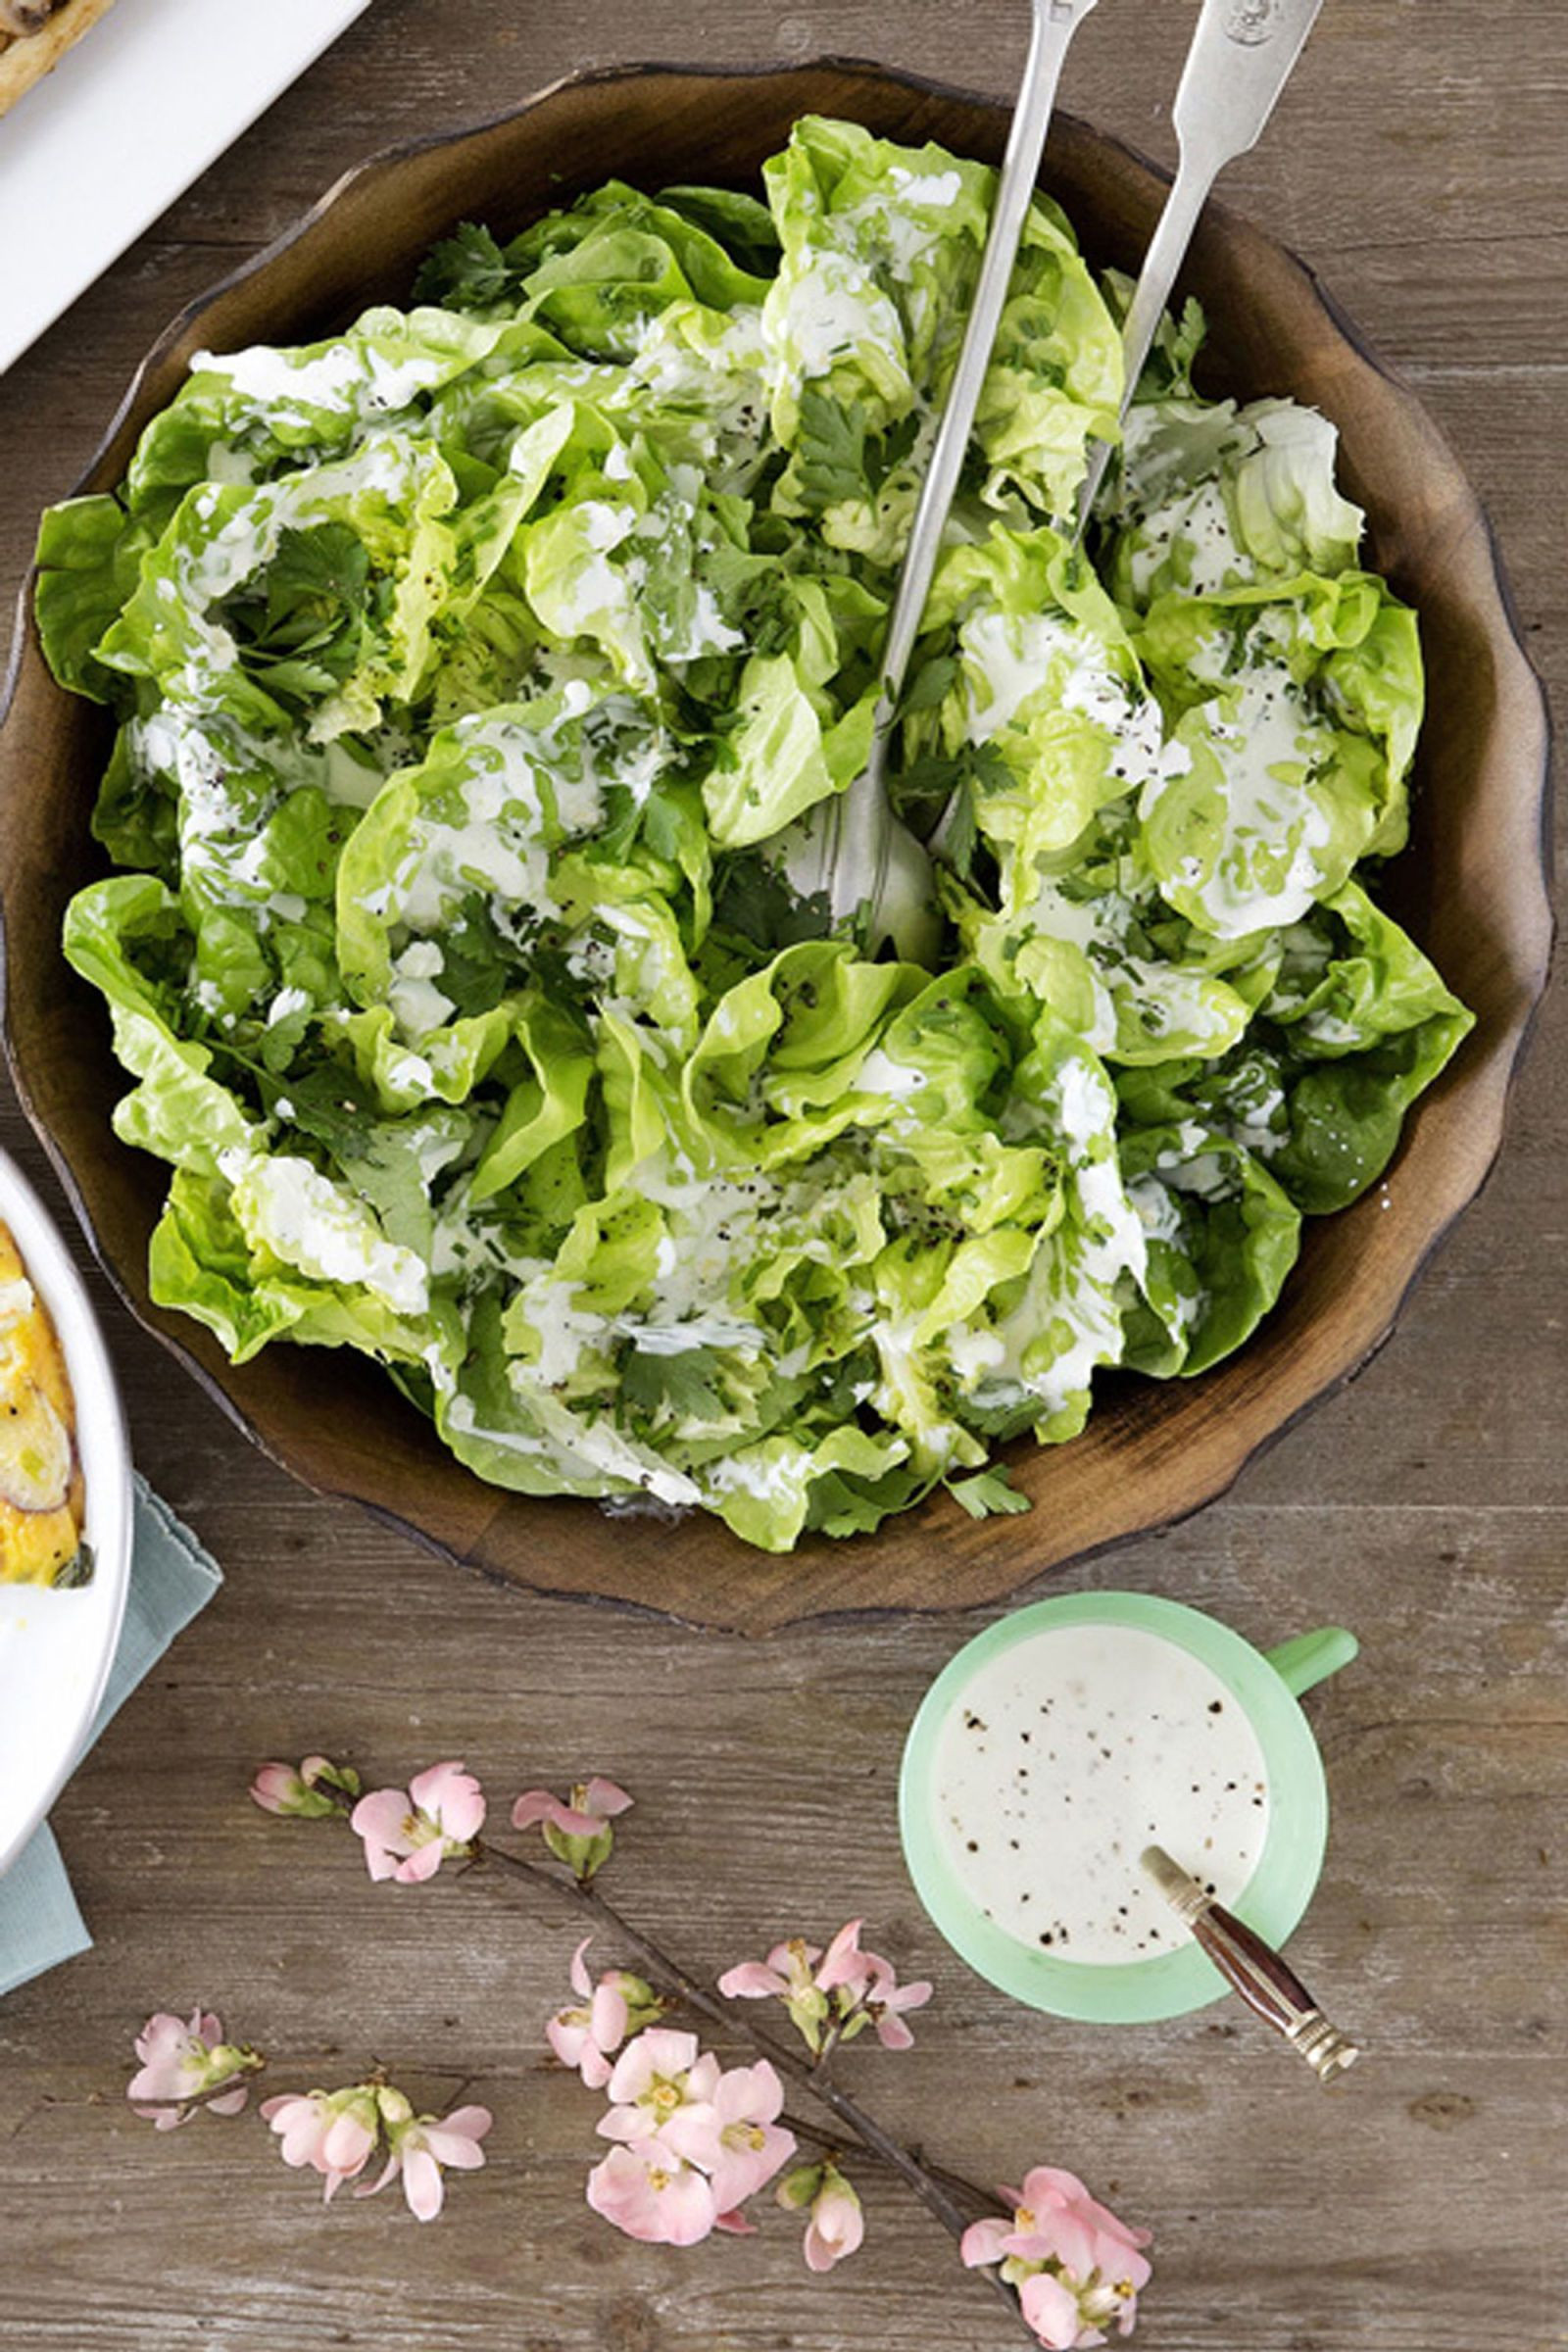 Easter Salads To Make
 40 Recipes to Make Your Best Ever Easter Brunch